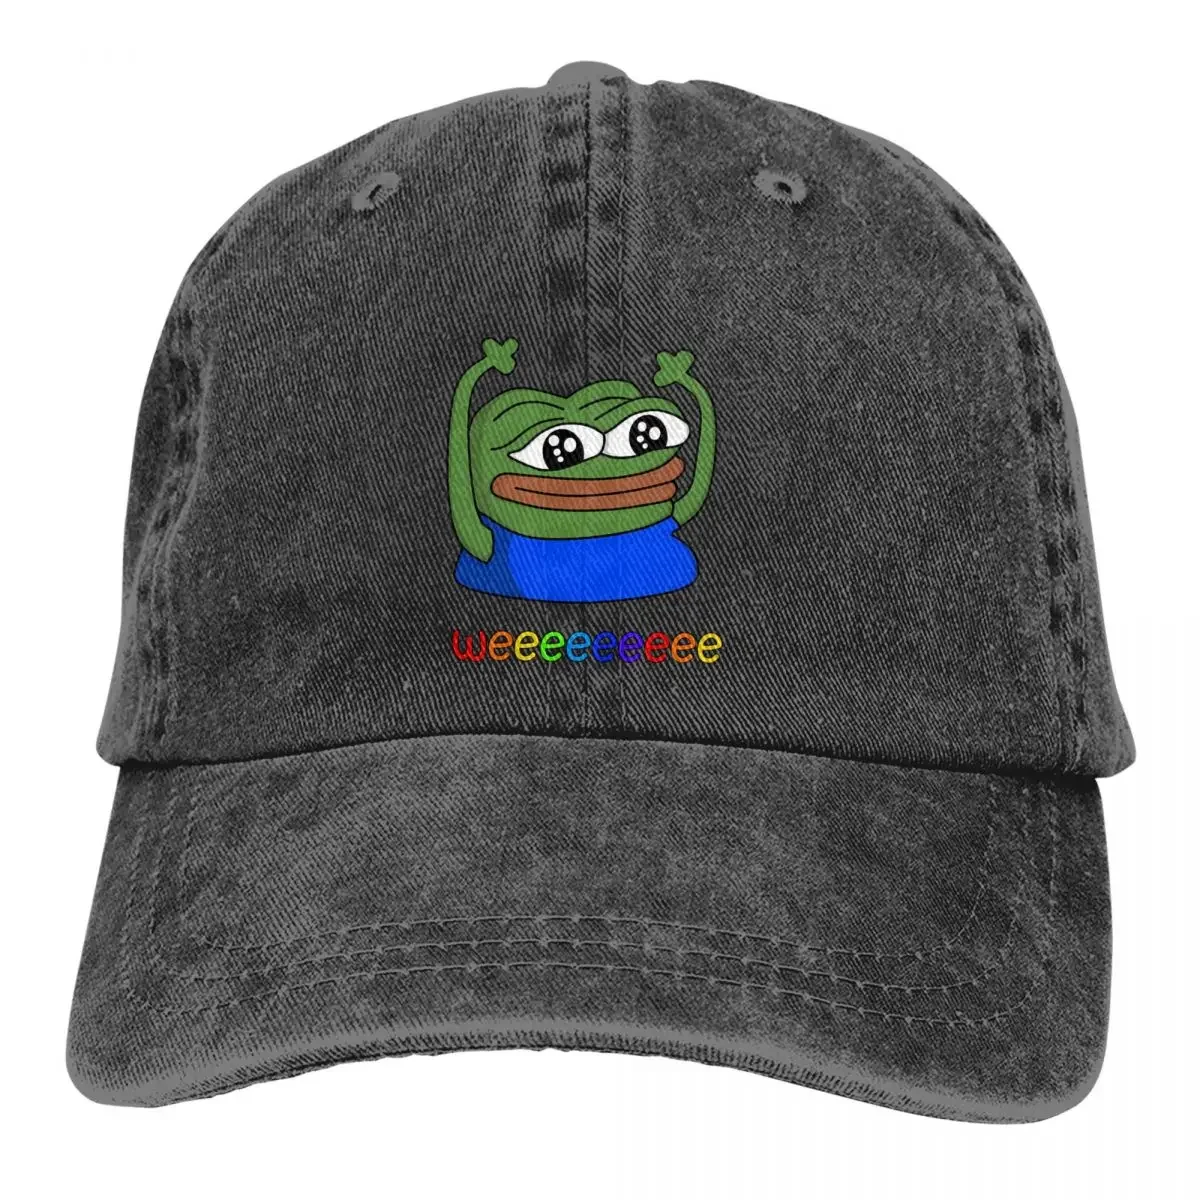 

Summer Cap Sun Visor Weeeeeeeee Hip Hop Caps Pepe Frog Animal Cowboy Hat Peaked Hats